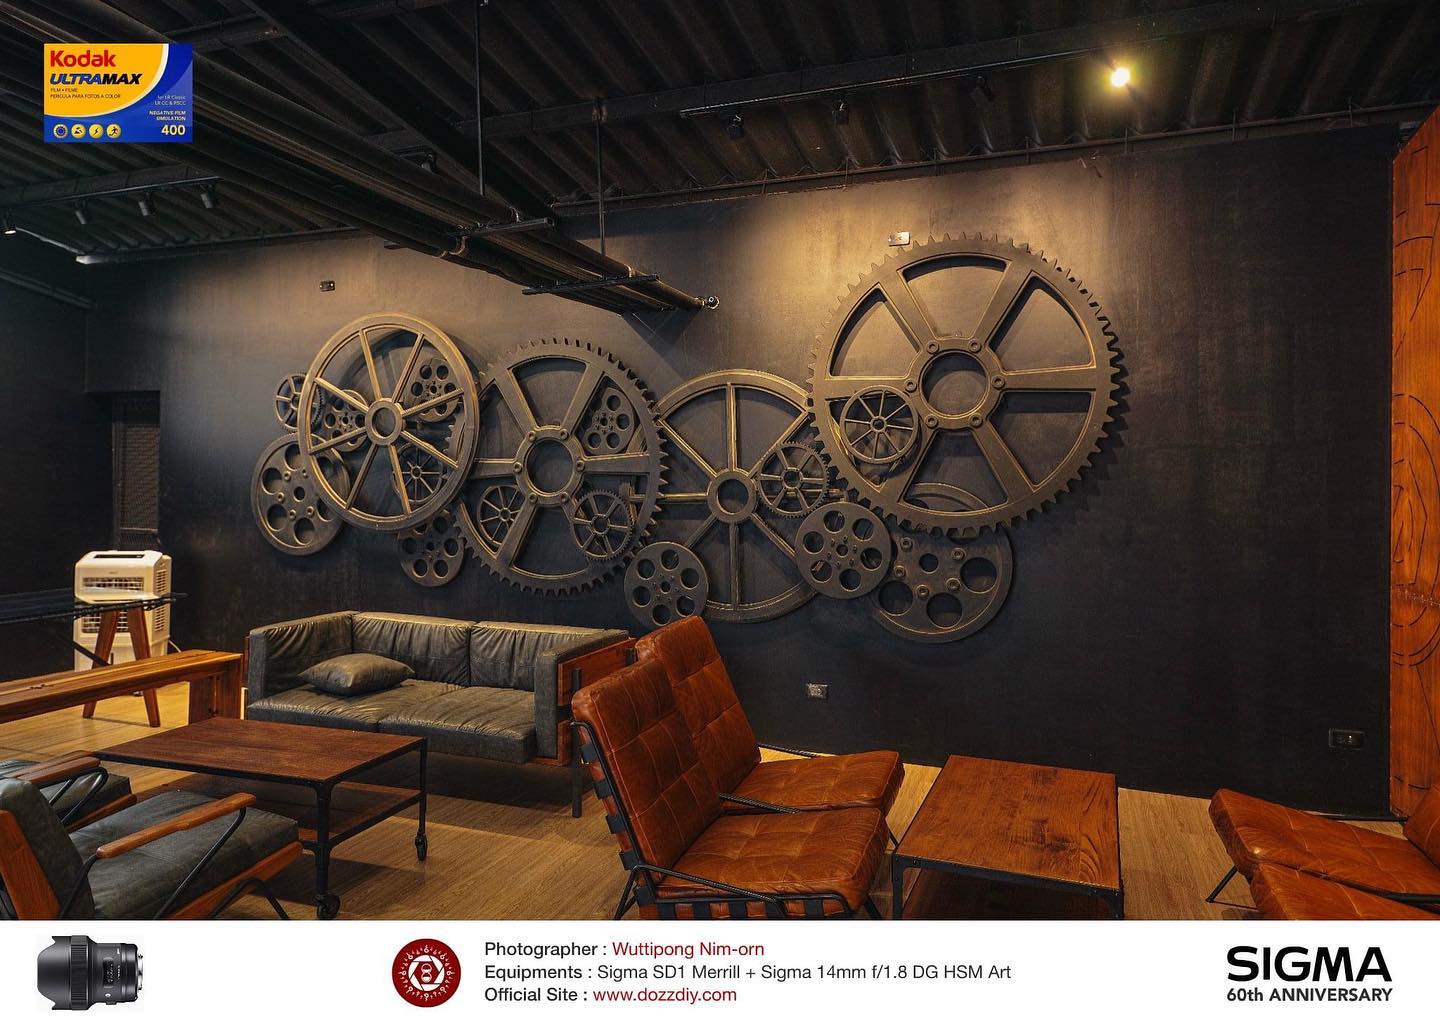 #wall #decoration #gears #metal #cafe #cafegram #instacafe #indoor #lighting